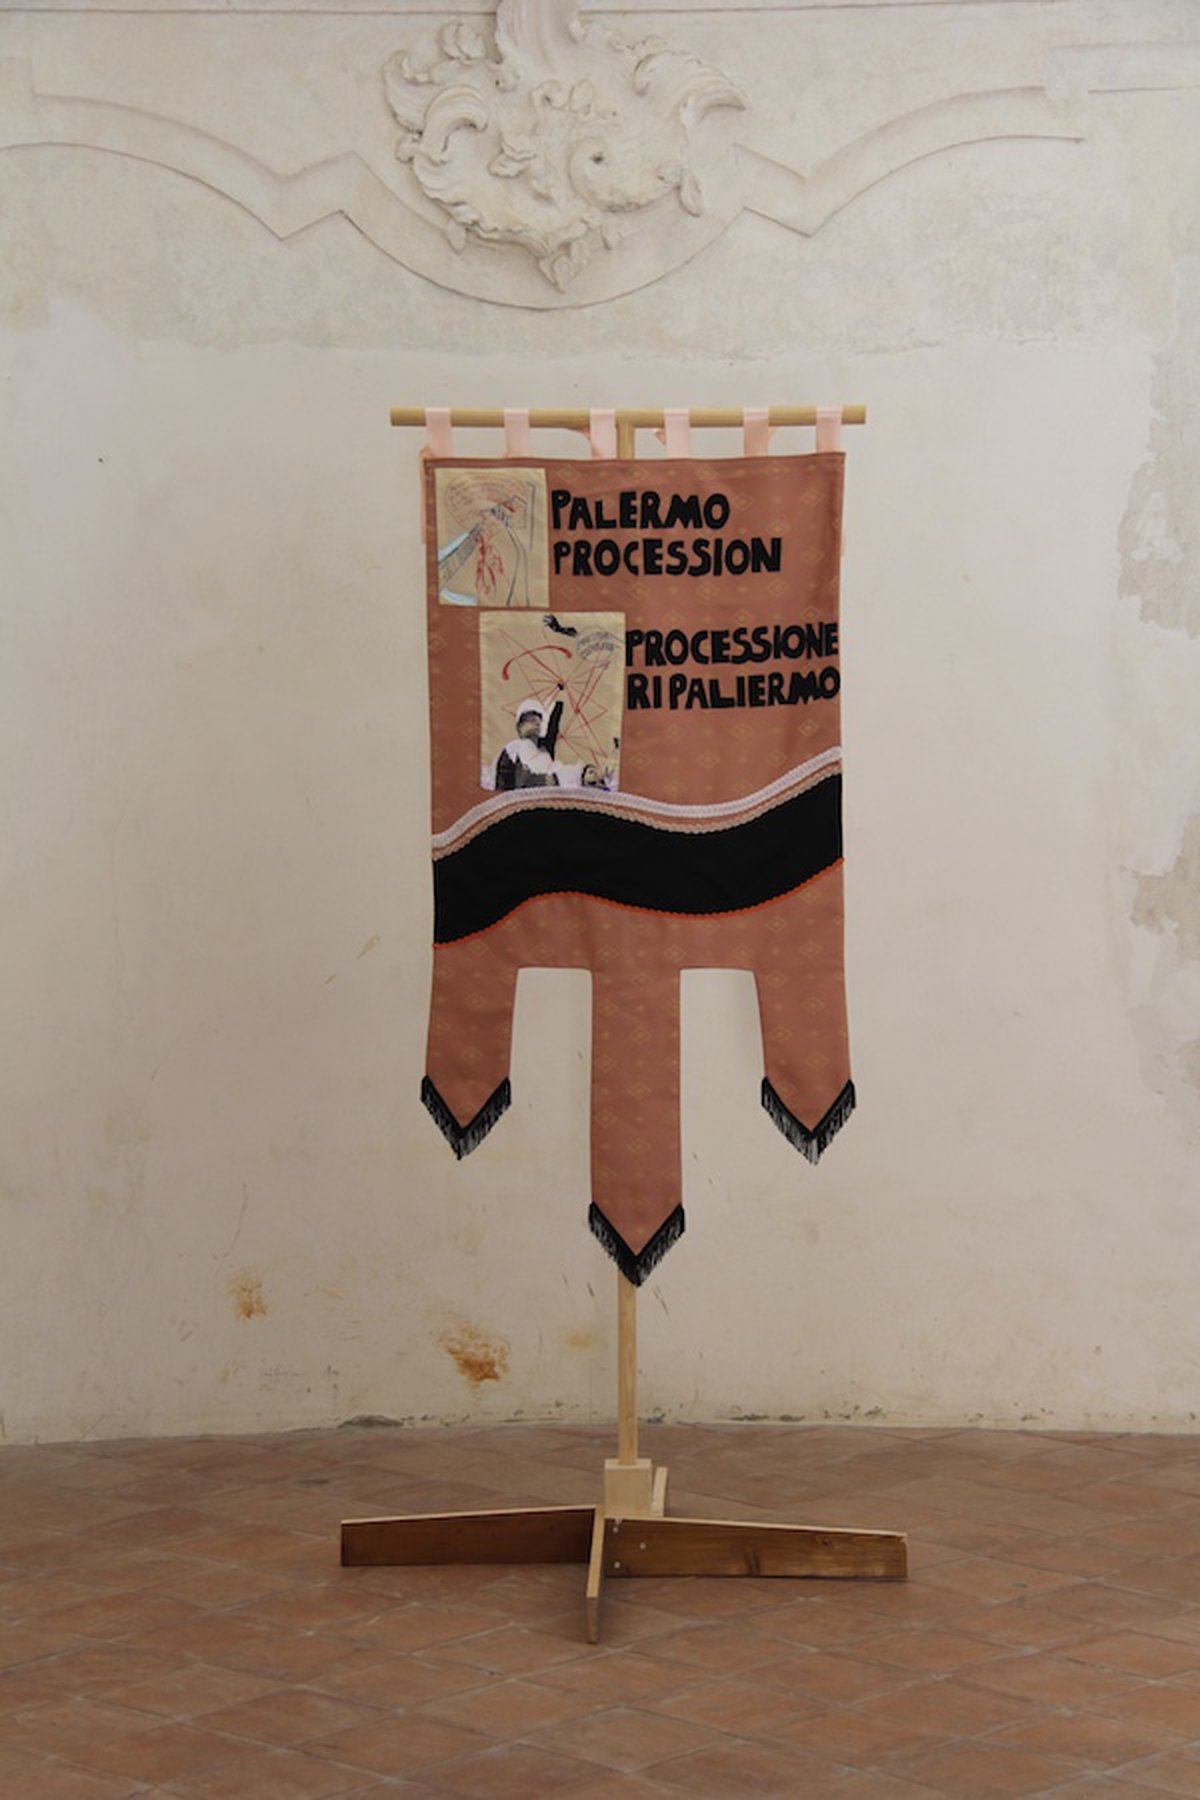 Palermo Procession \u002D PALERMO PROCESSION (PROCESSIONE RI PALIERMO)